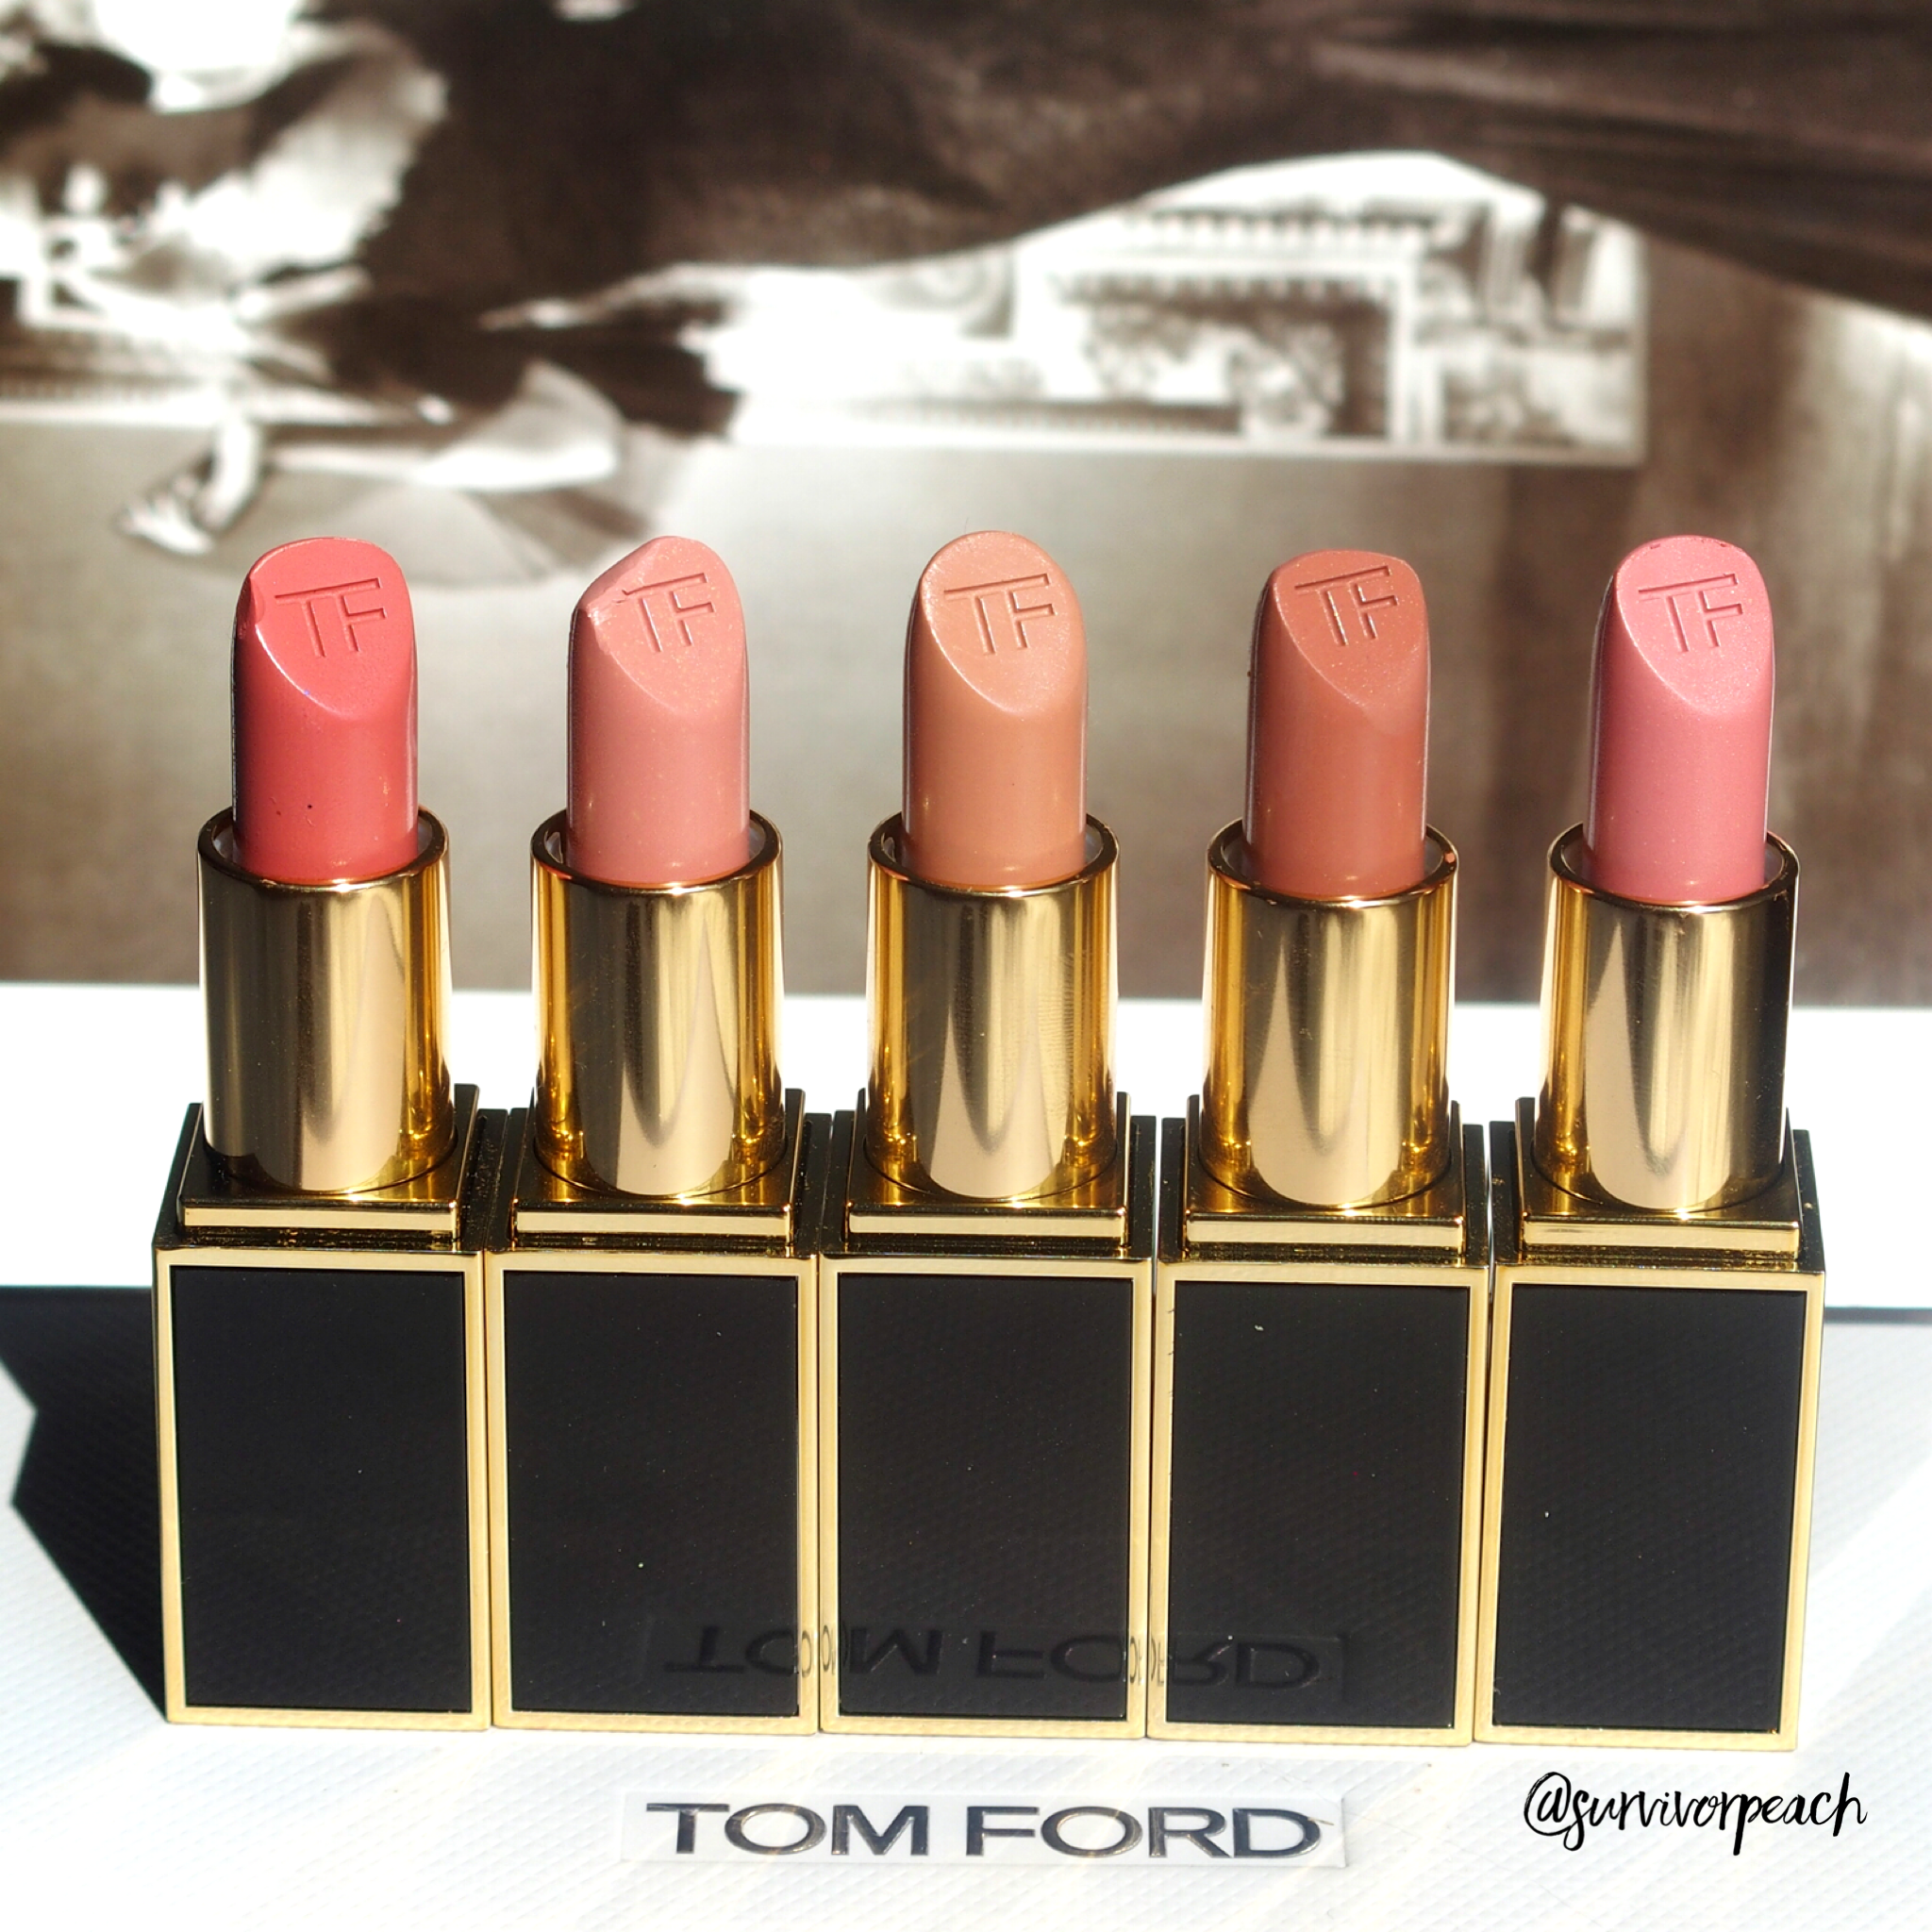 Tom Ford faces backlash over 'disturbing' lipstick shade names